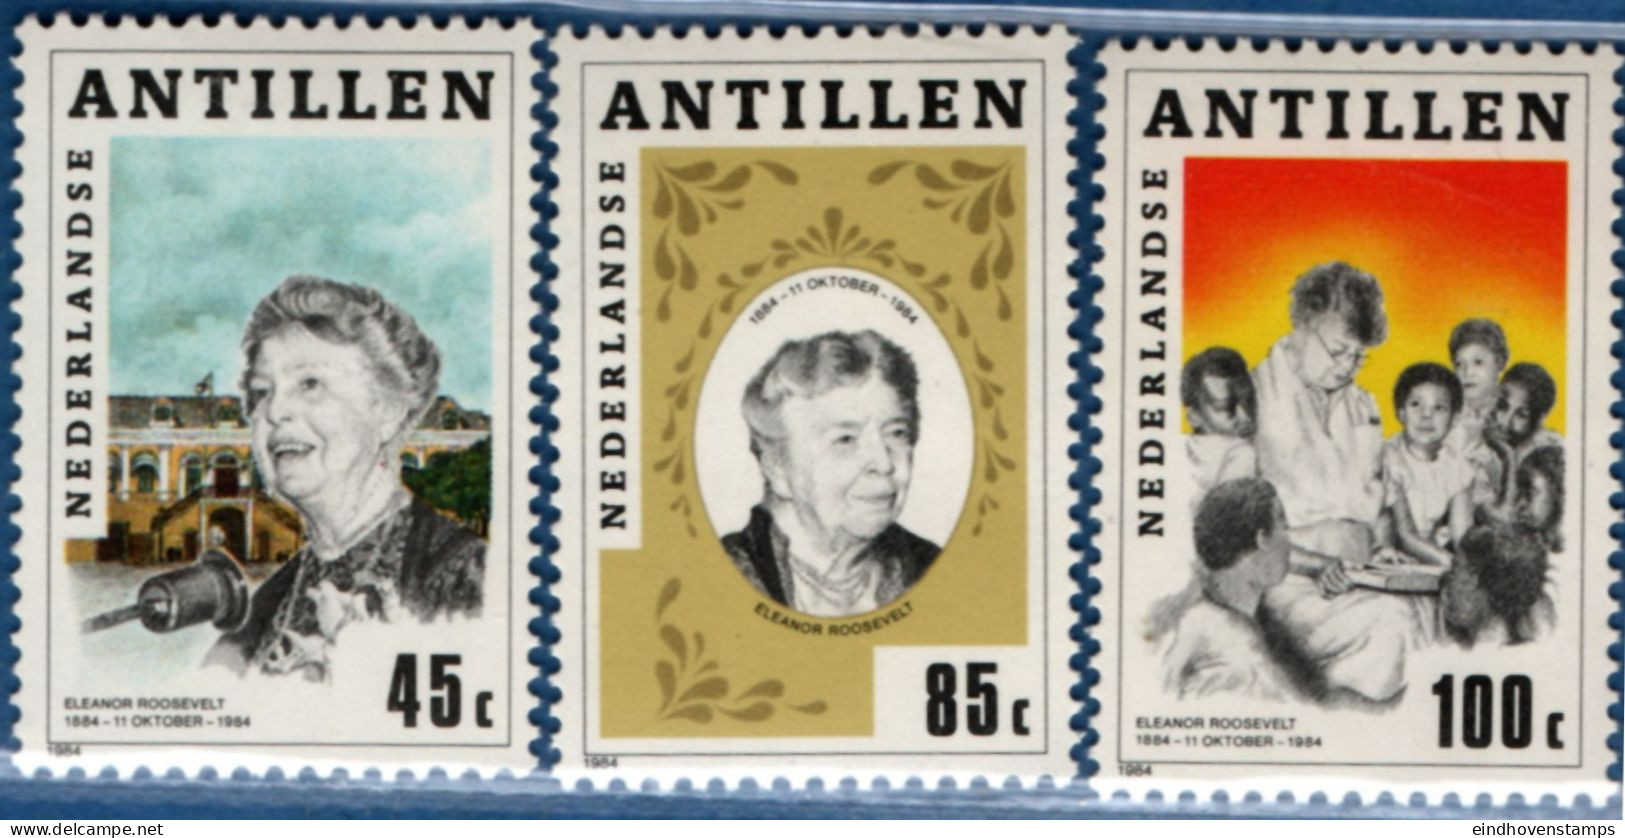 Dutch Antilles 1984 IEleonor Roosevelt, 100th Birthday, 3 Values MNH Nederlandse Antillen - Donne Celebri